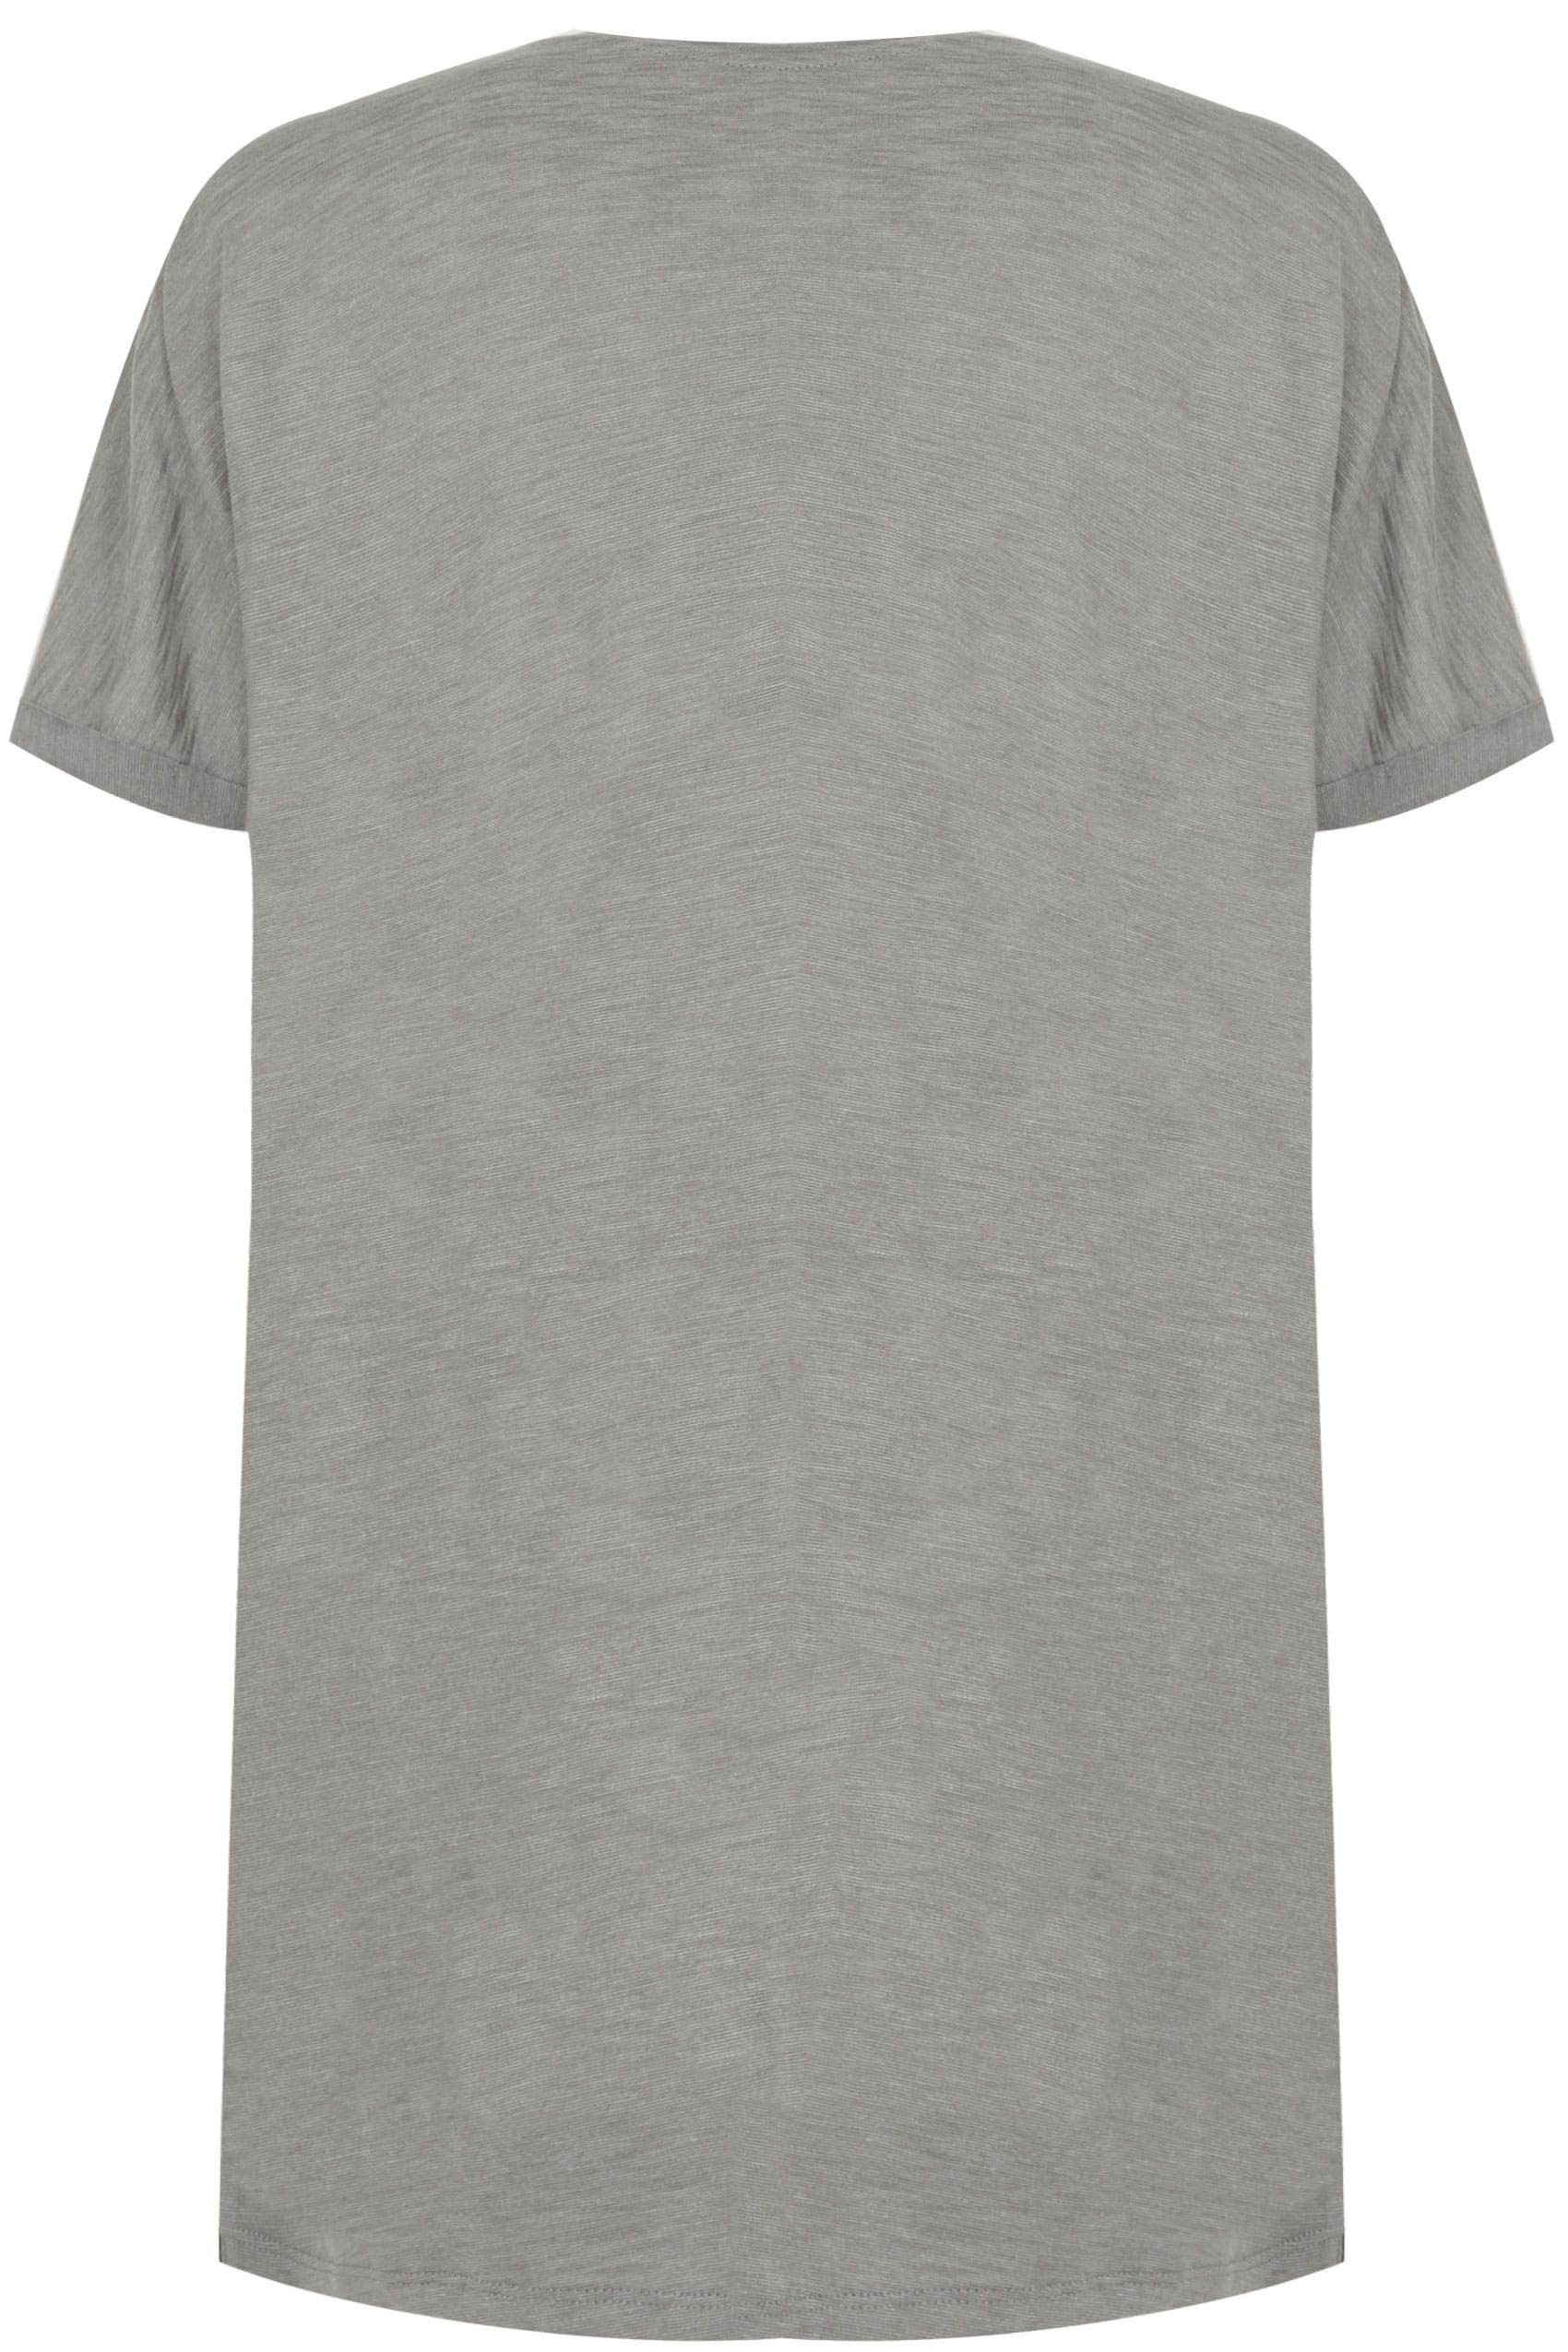 Grey & Black Longline Colour Block T-Shirt With Studded Details, plus ...